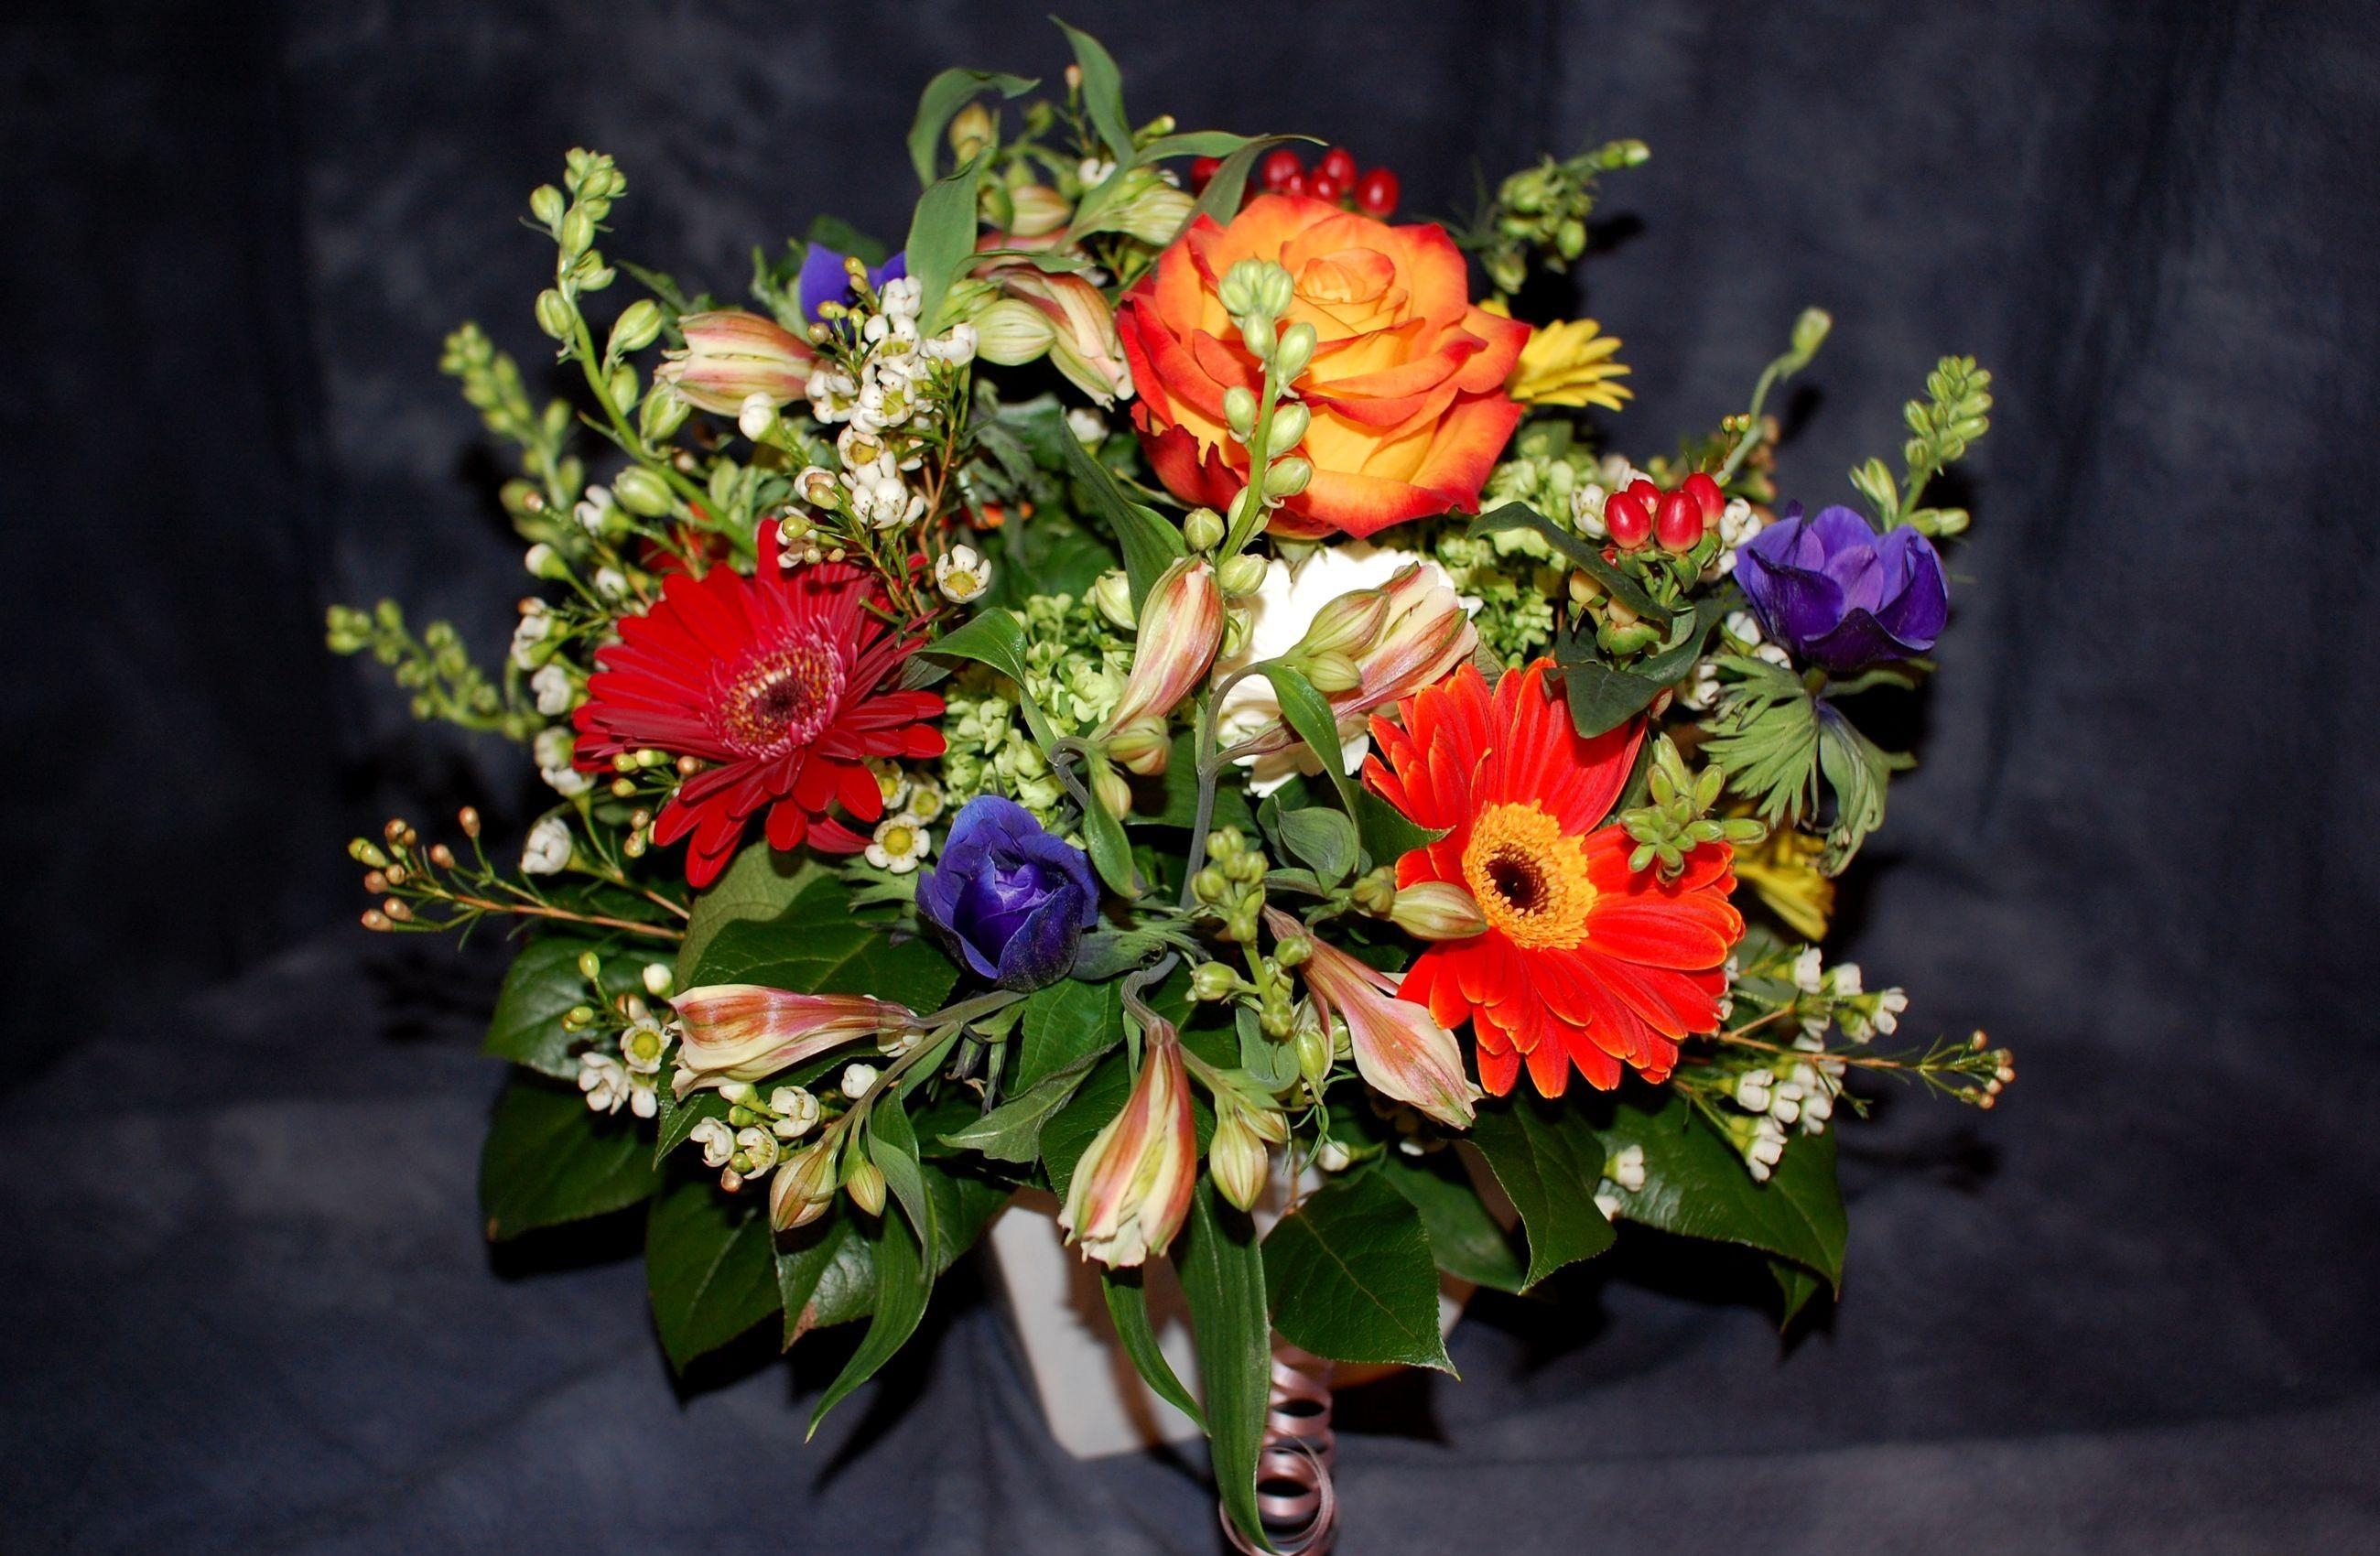 flowers, roses, gerberas, registration, typography, alstroemeria, bouquet, composition High Definition image